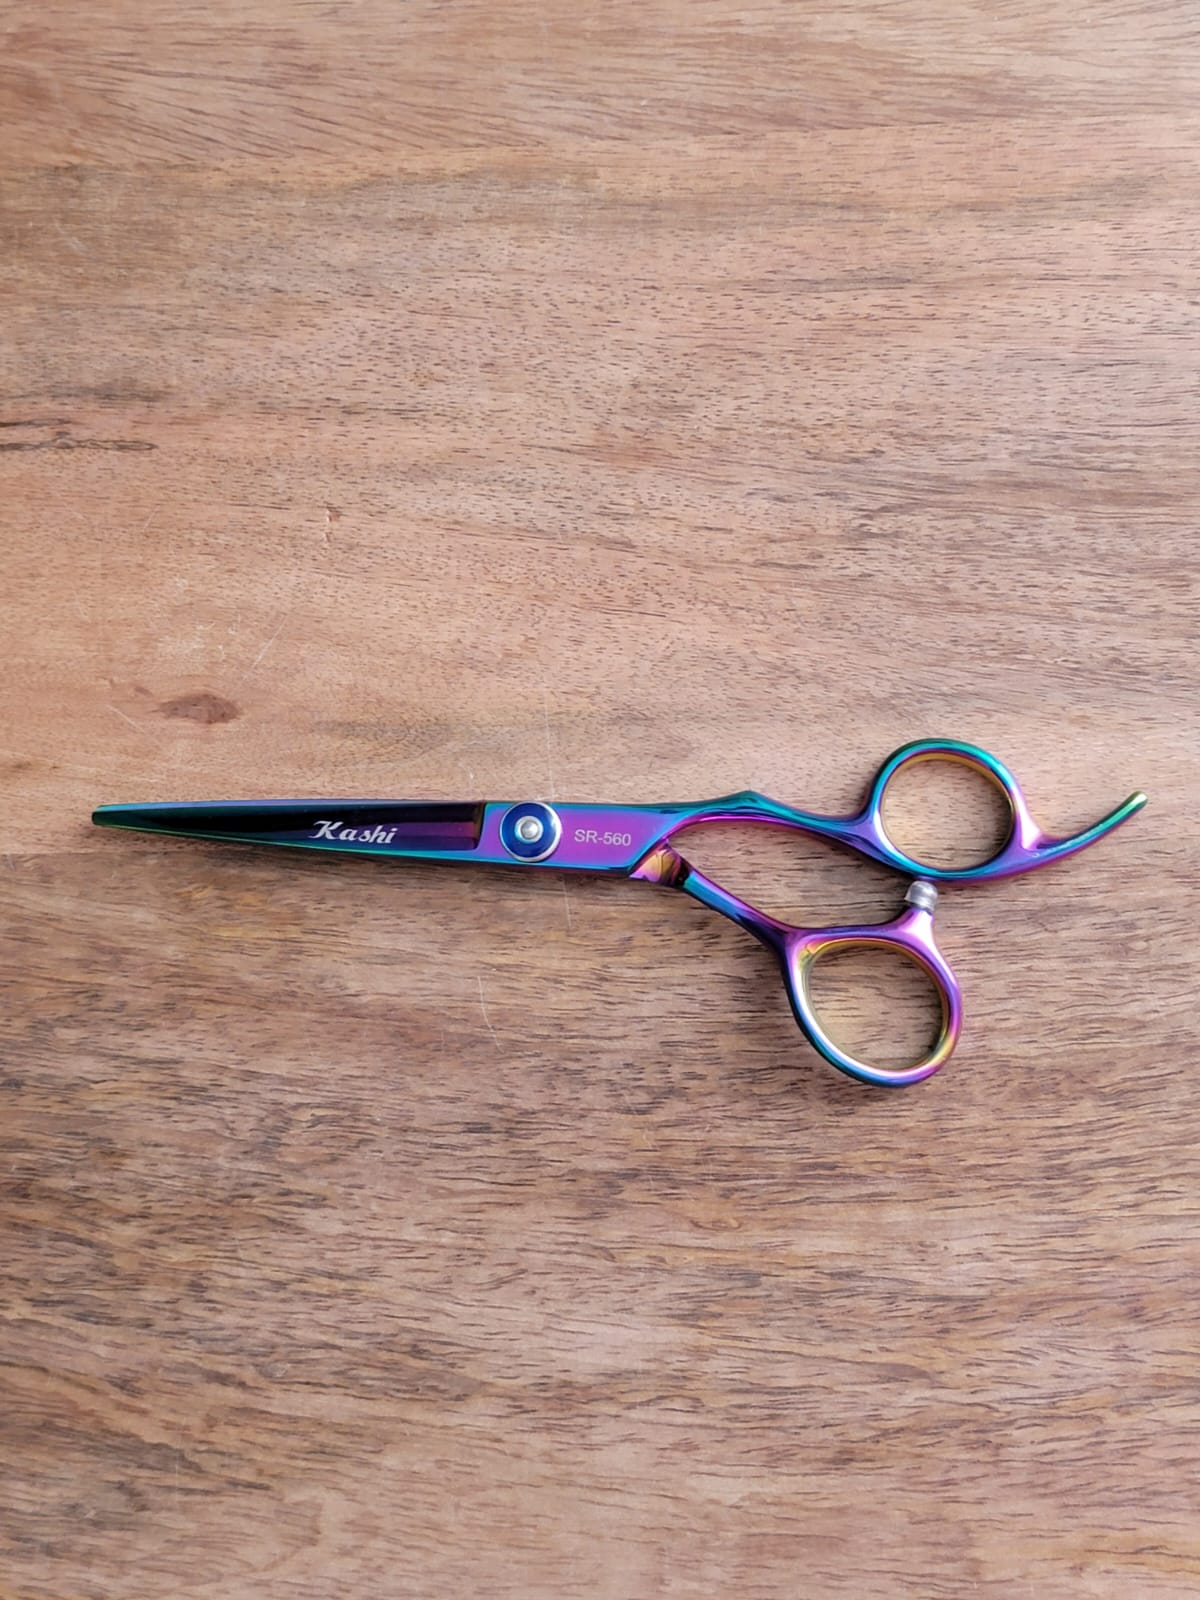 Kashi Professional Cutting Hair Shears SR-560 Rainbow Color - Japanese Steel